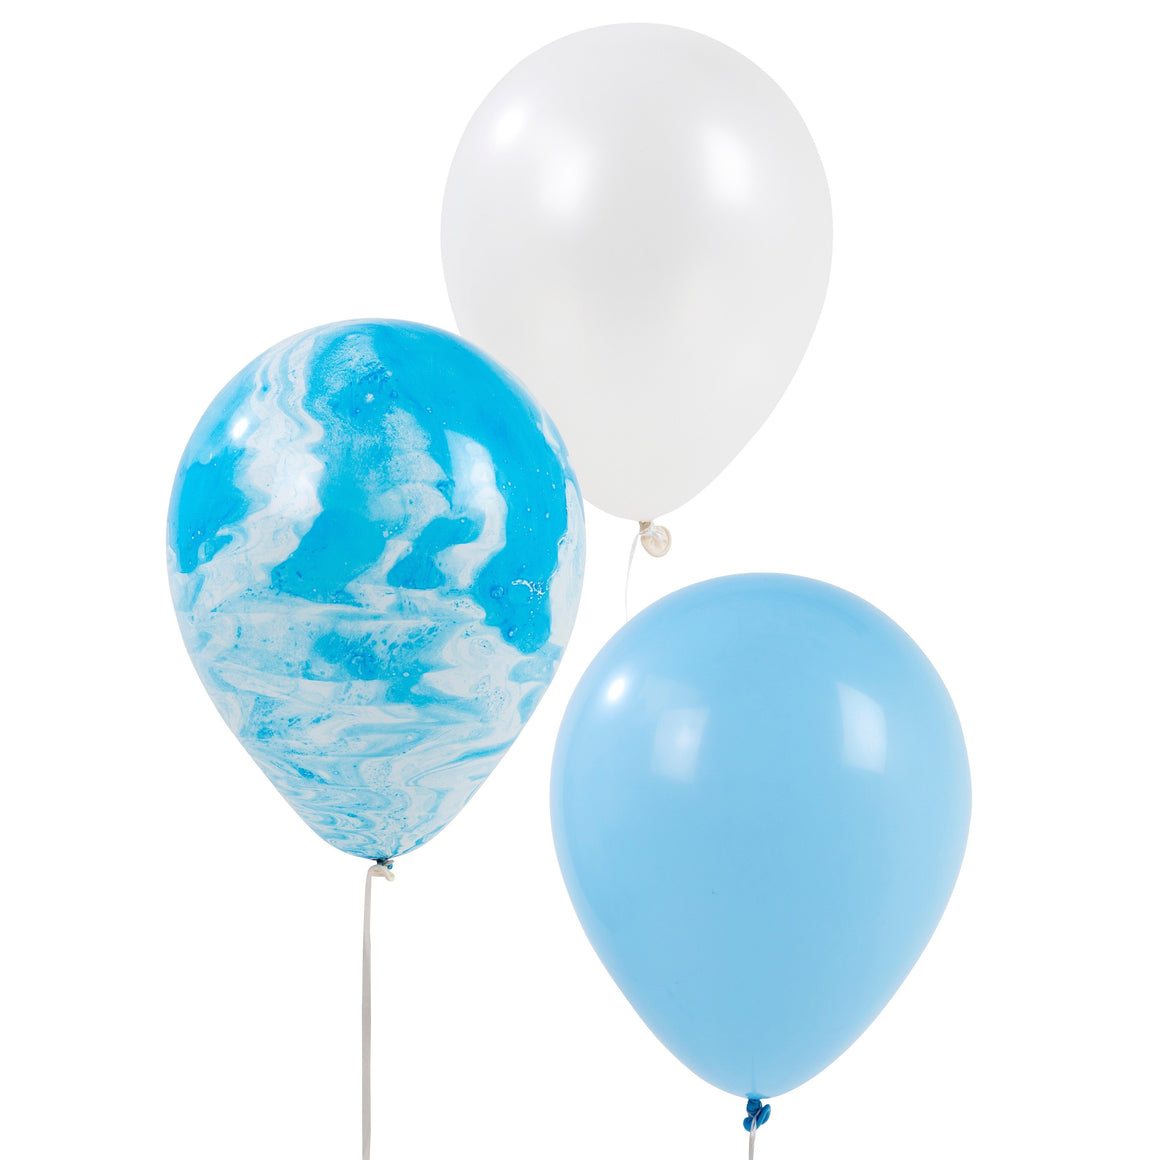 BALLOONS - MARBLE KIT BLUE, Balloons, TALKING TABLES - Bon + Co. Party Studio